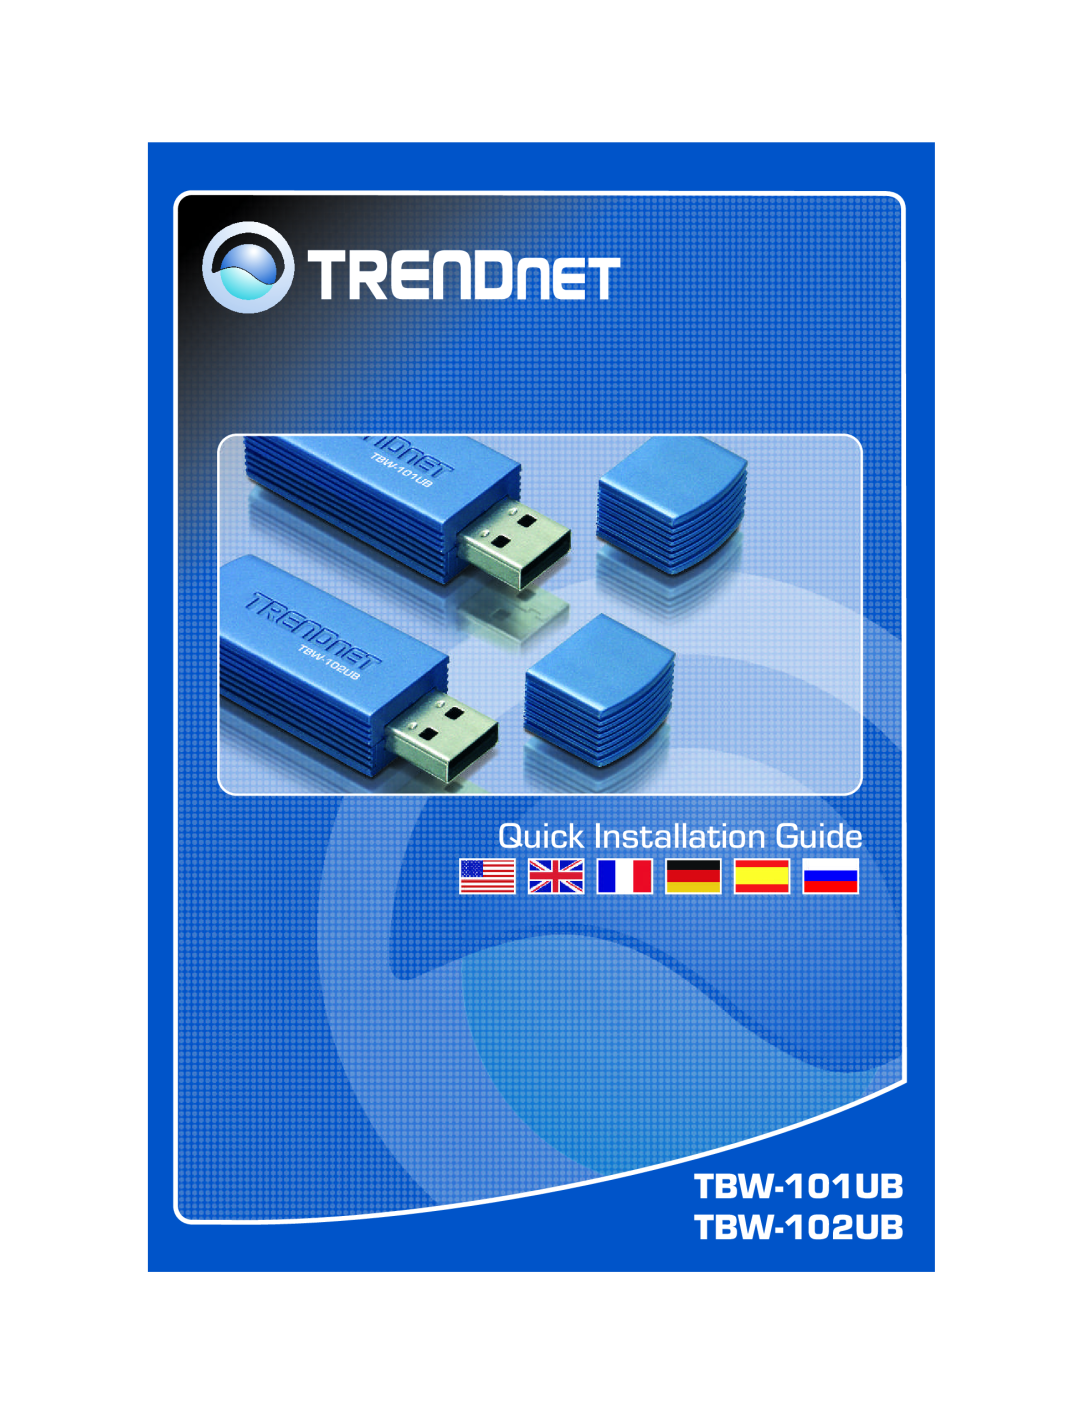 TRENDnet manual Quick Installation Guide, TBW-101UB TBW-102UB 